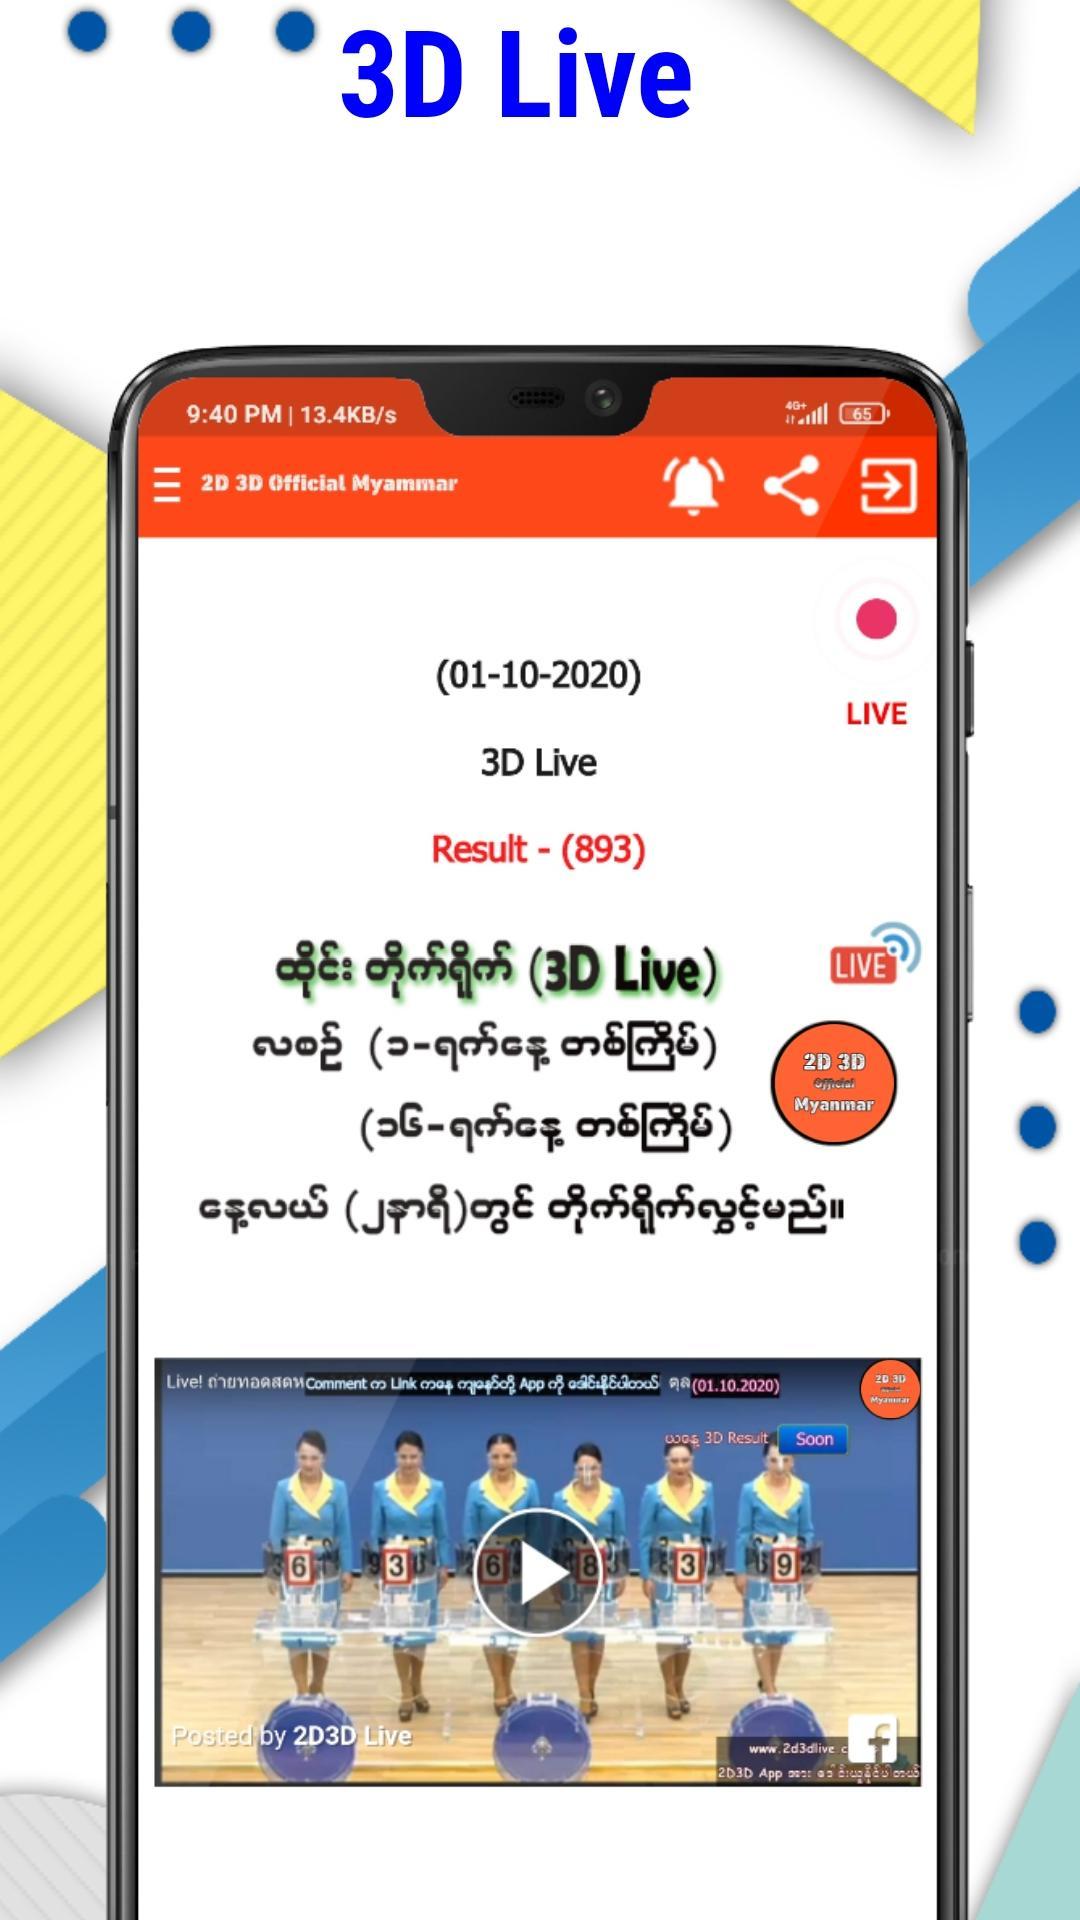 2D 3D Official Myanmar 🇲🇲 - Myanmar 2D 3D Live 1.0 Screenshot 3